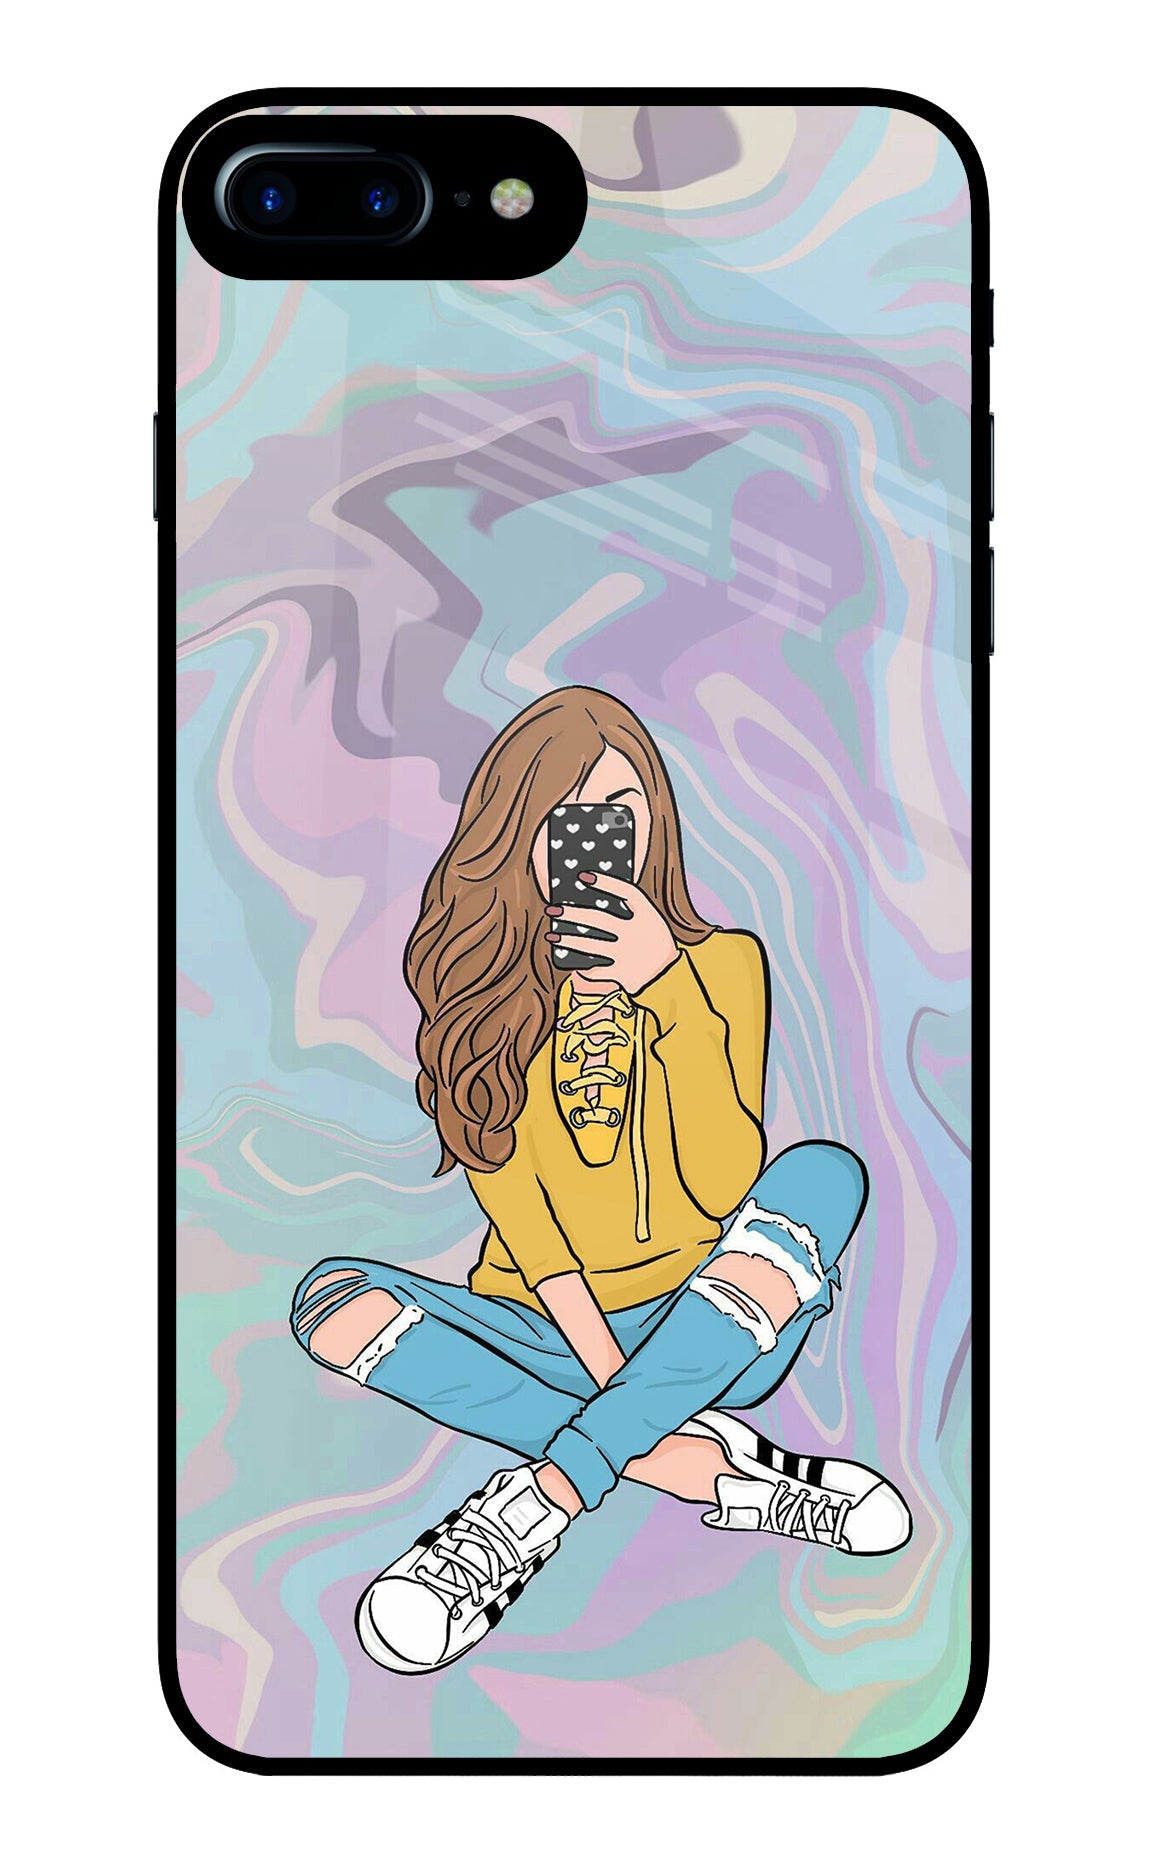 Selfie Girl iPhone 7 Plus Glass Case